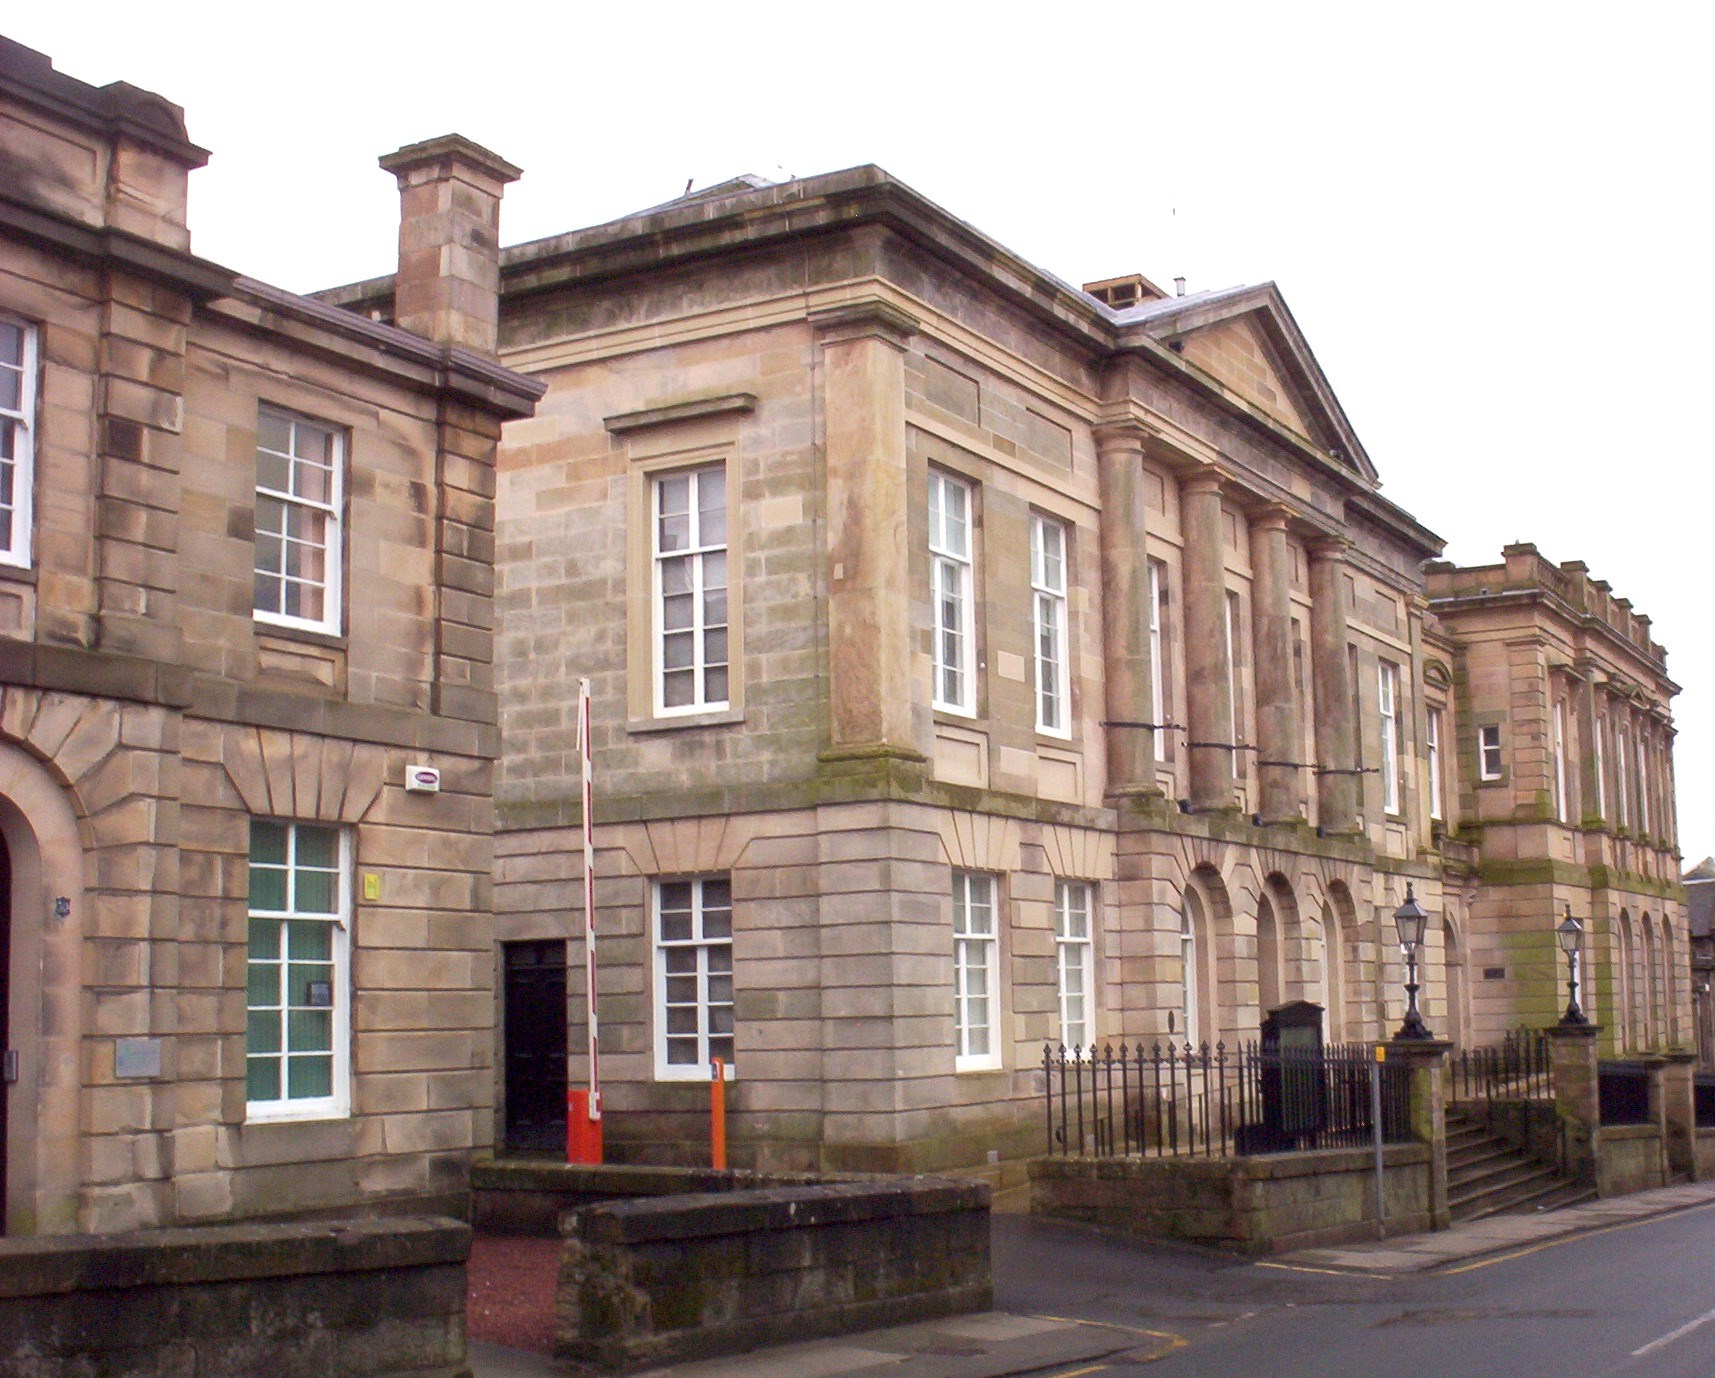 Photograph of the Lanark Sheriff  Court